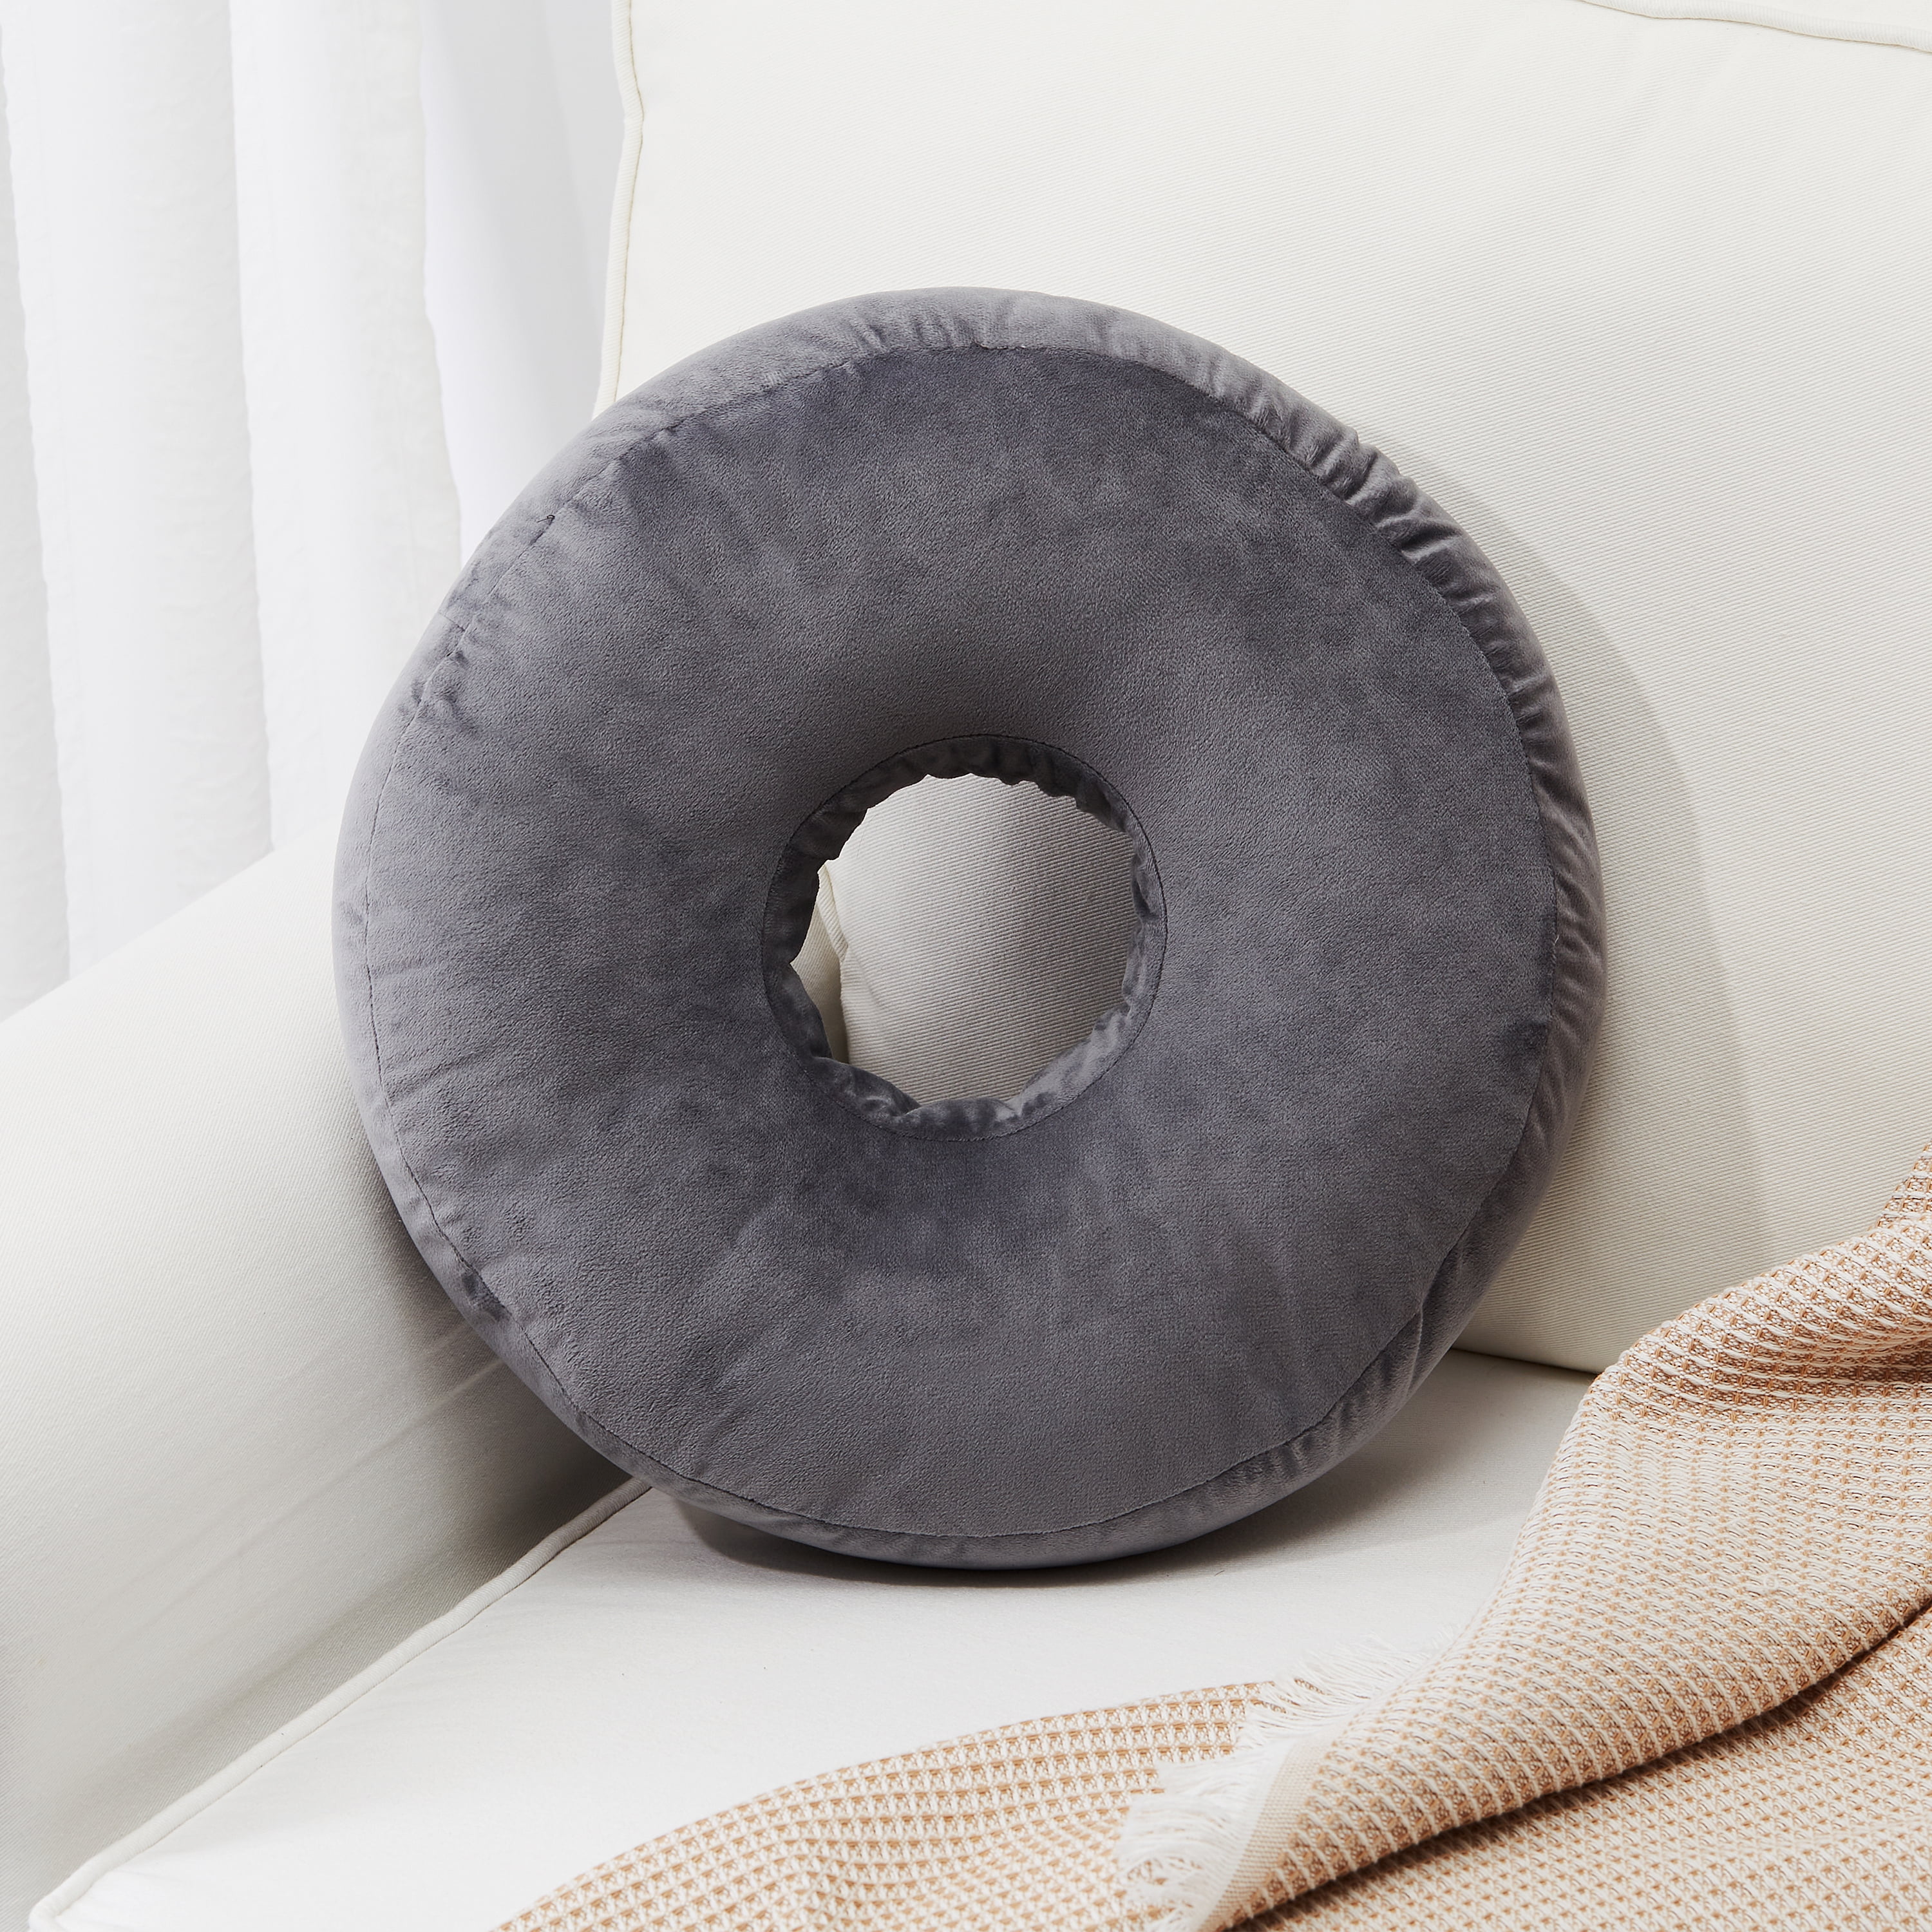 Sofa Cushions Pillow Donut, Donut Pillow Seat Cushion